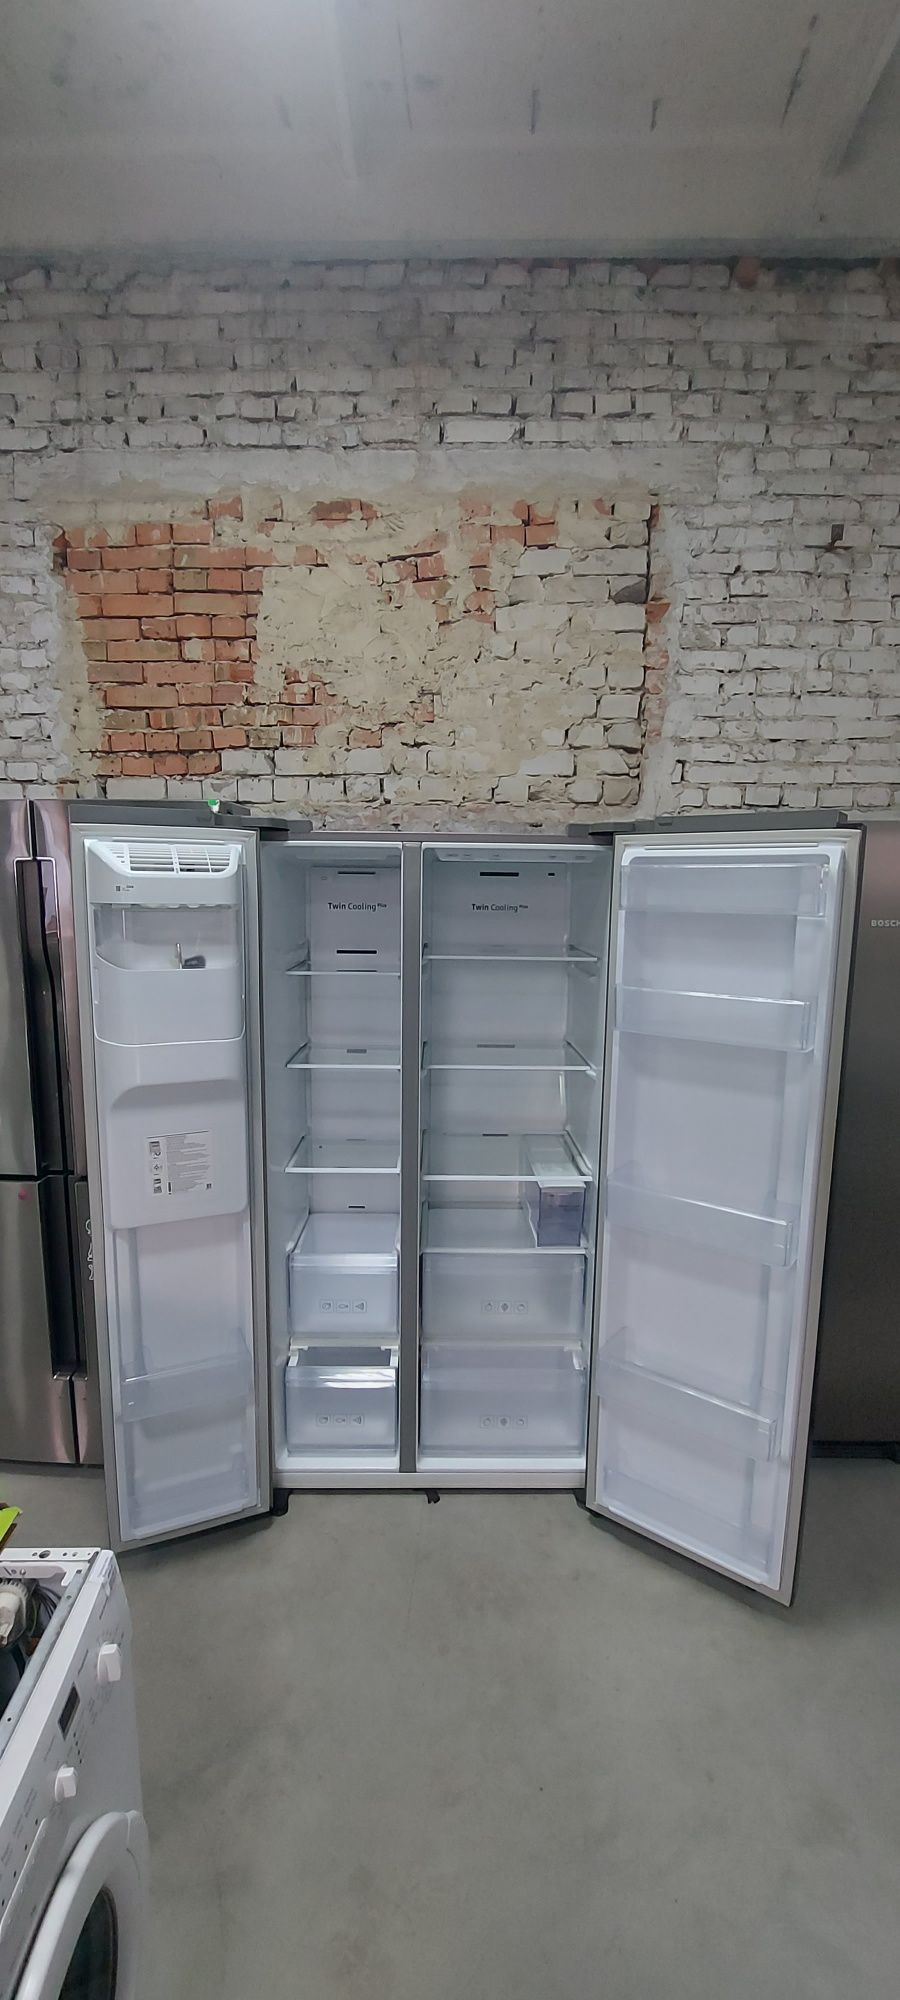 Холодильник Side by side Samsung 1,77